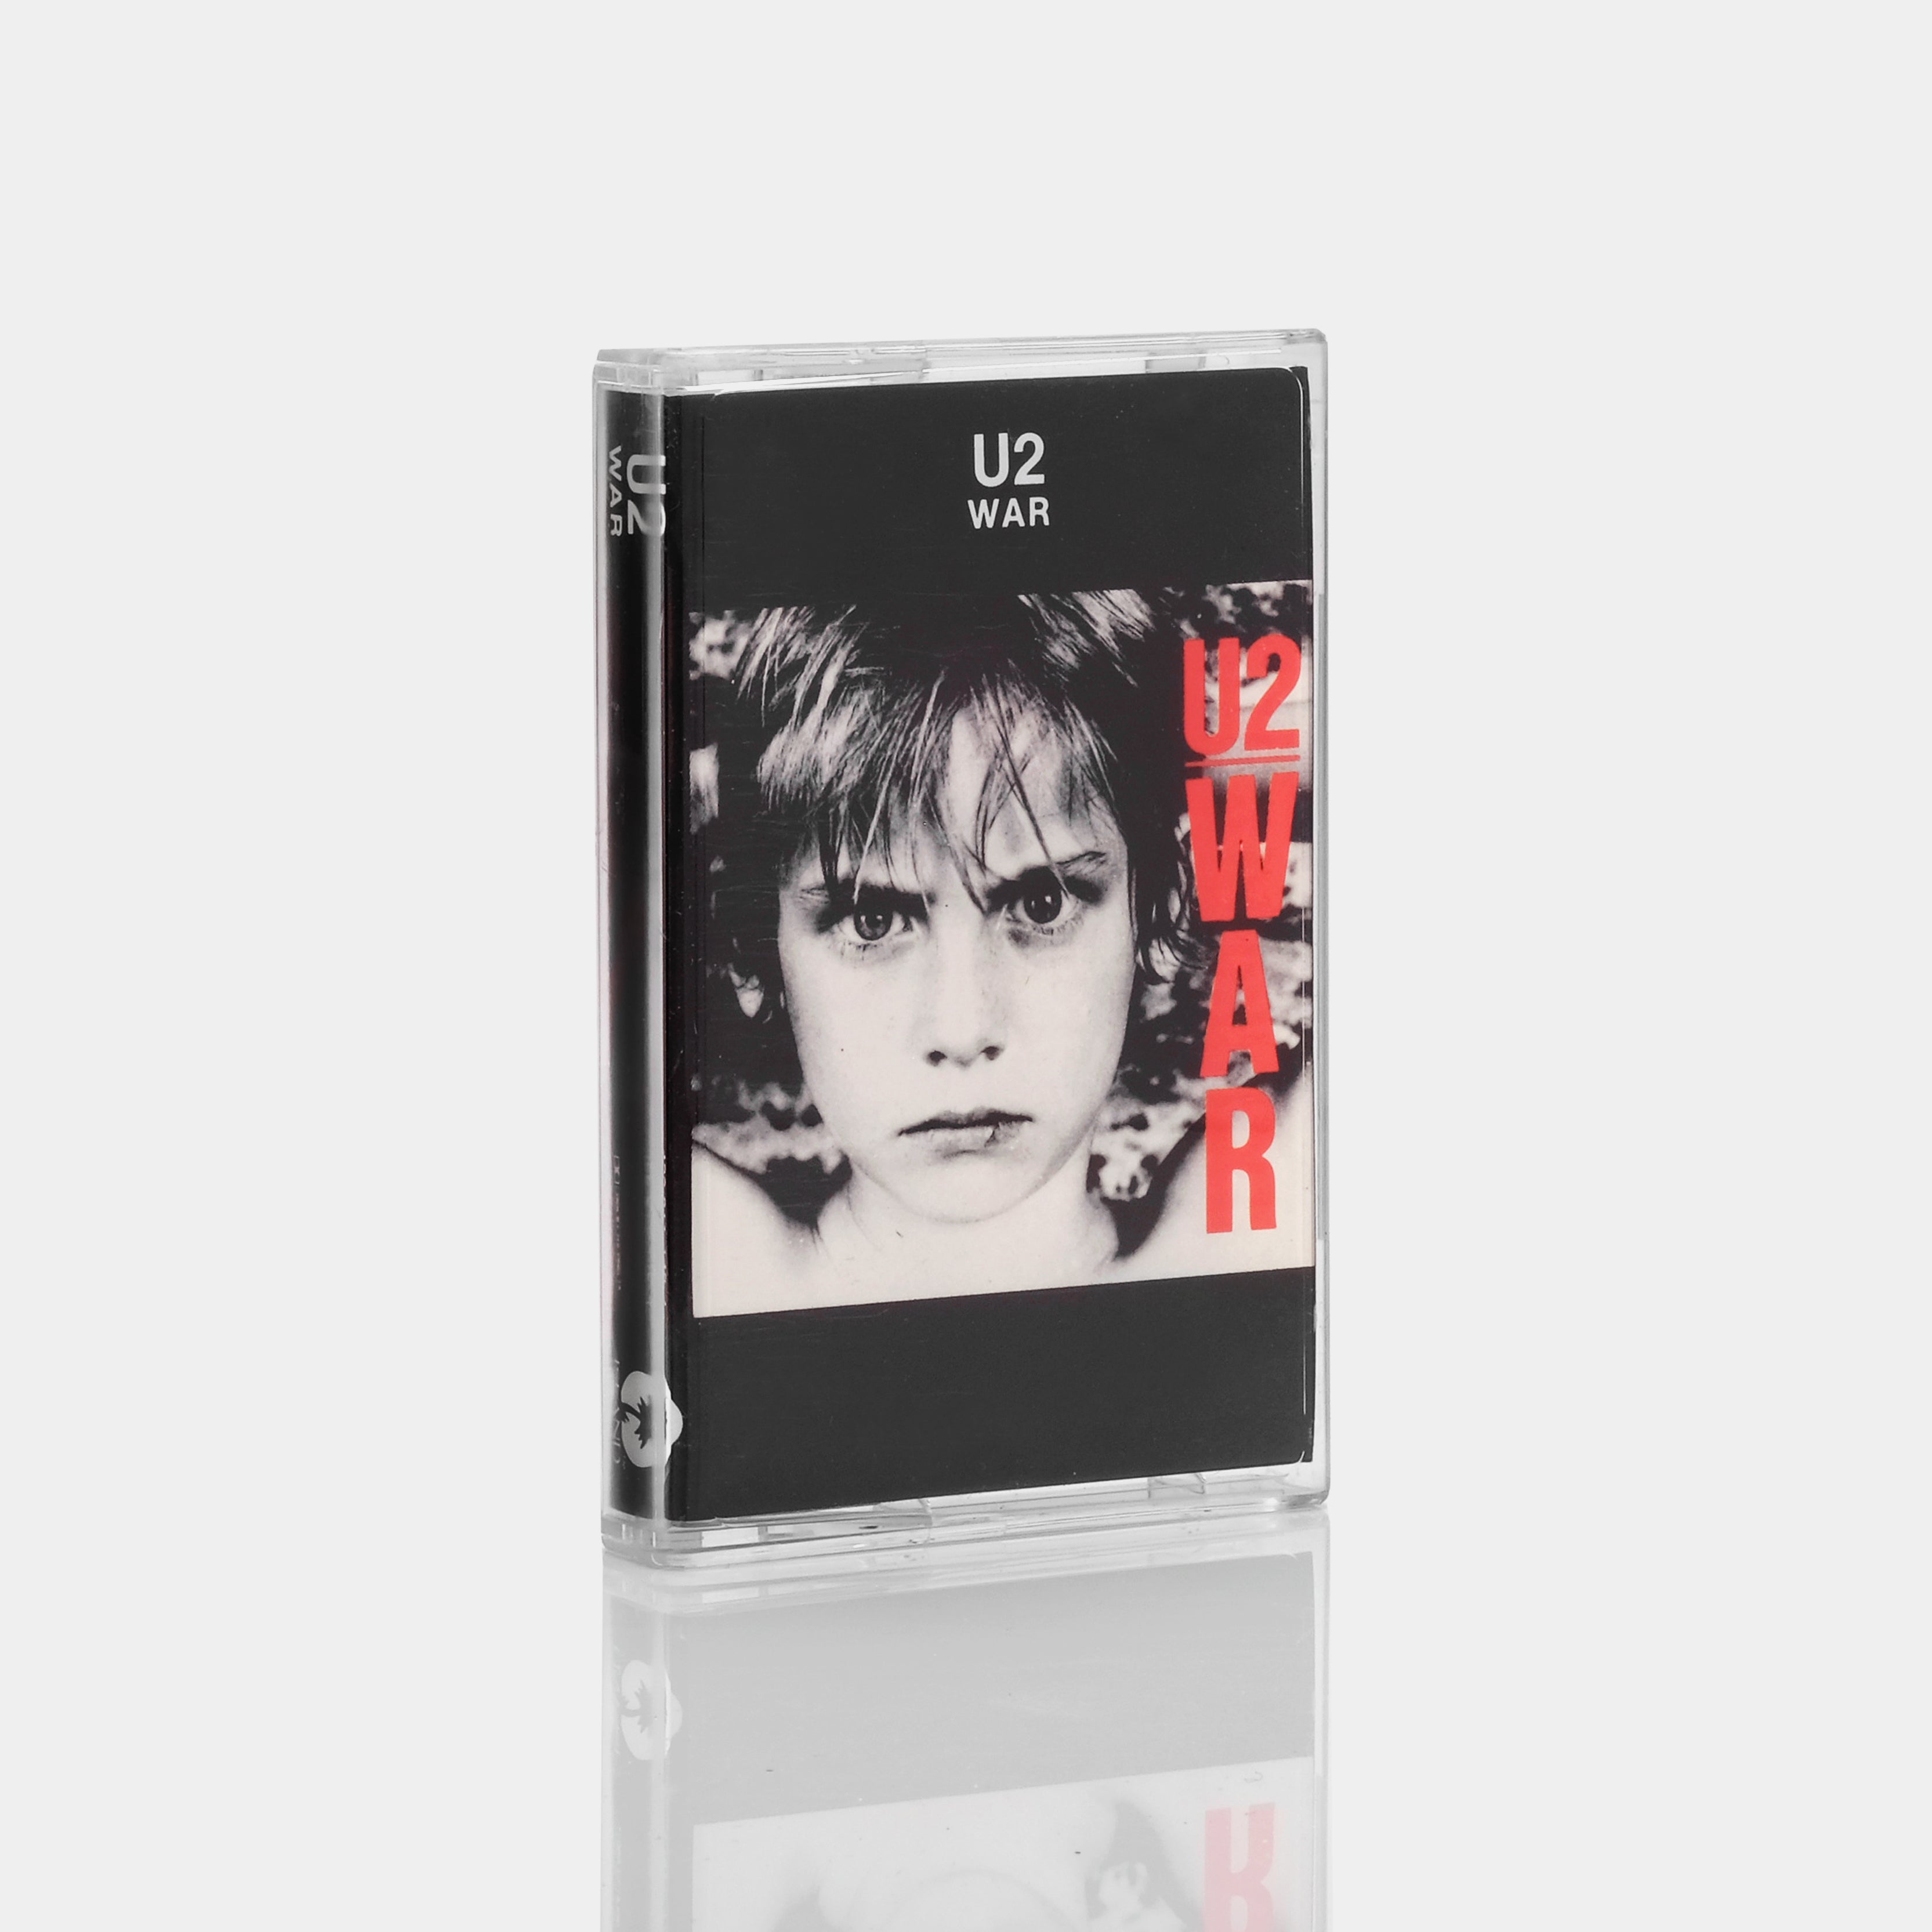 U2 - War Cassette Tape